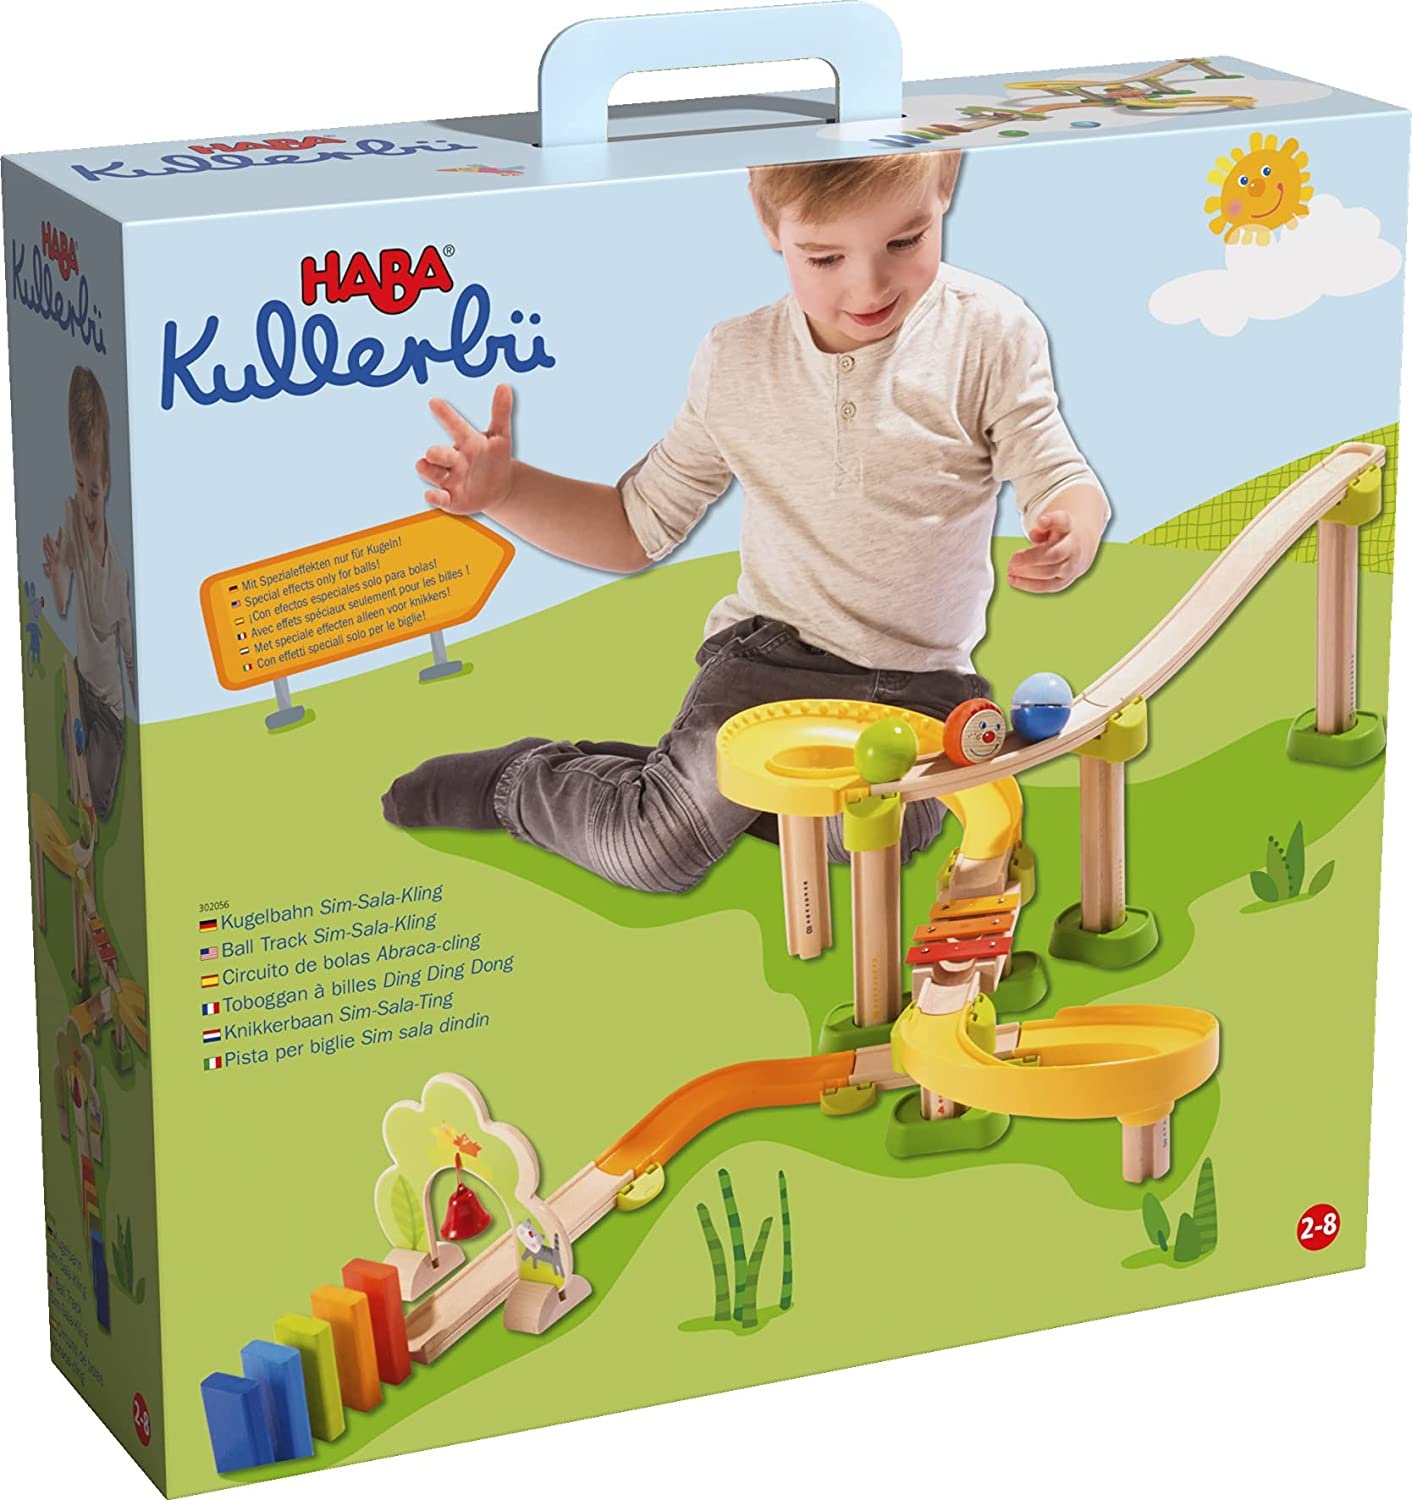 Haba Kullerbu Ball Track Sim-Sala-Kling Set